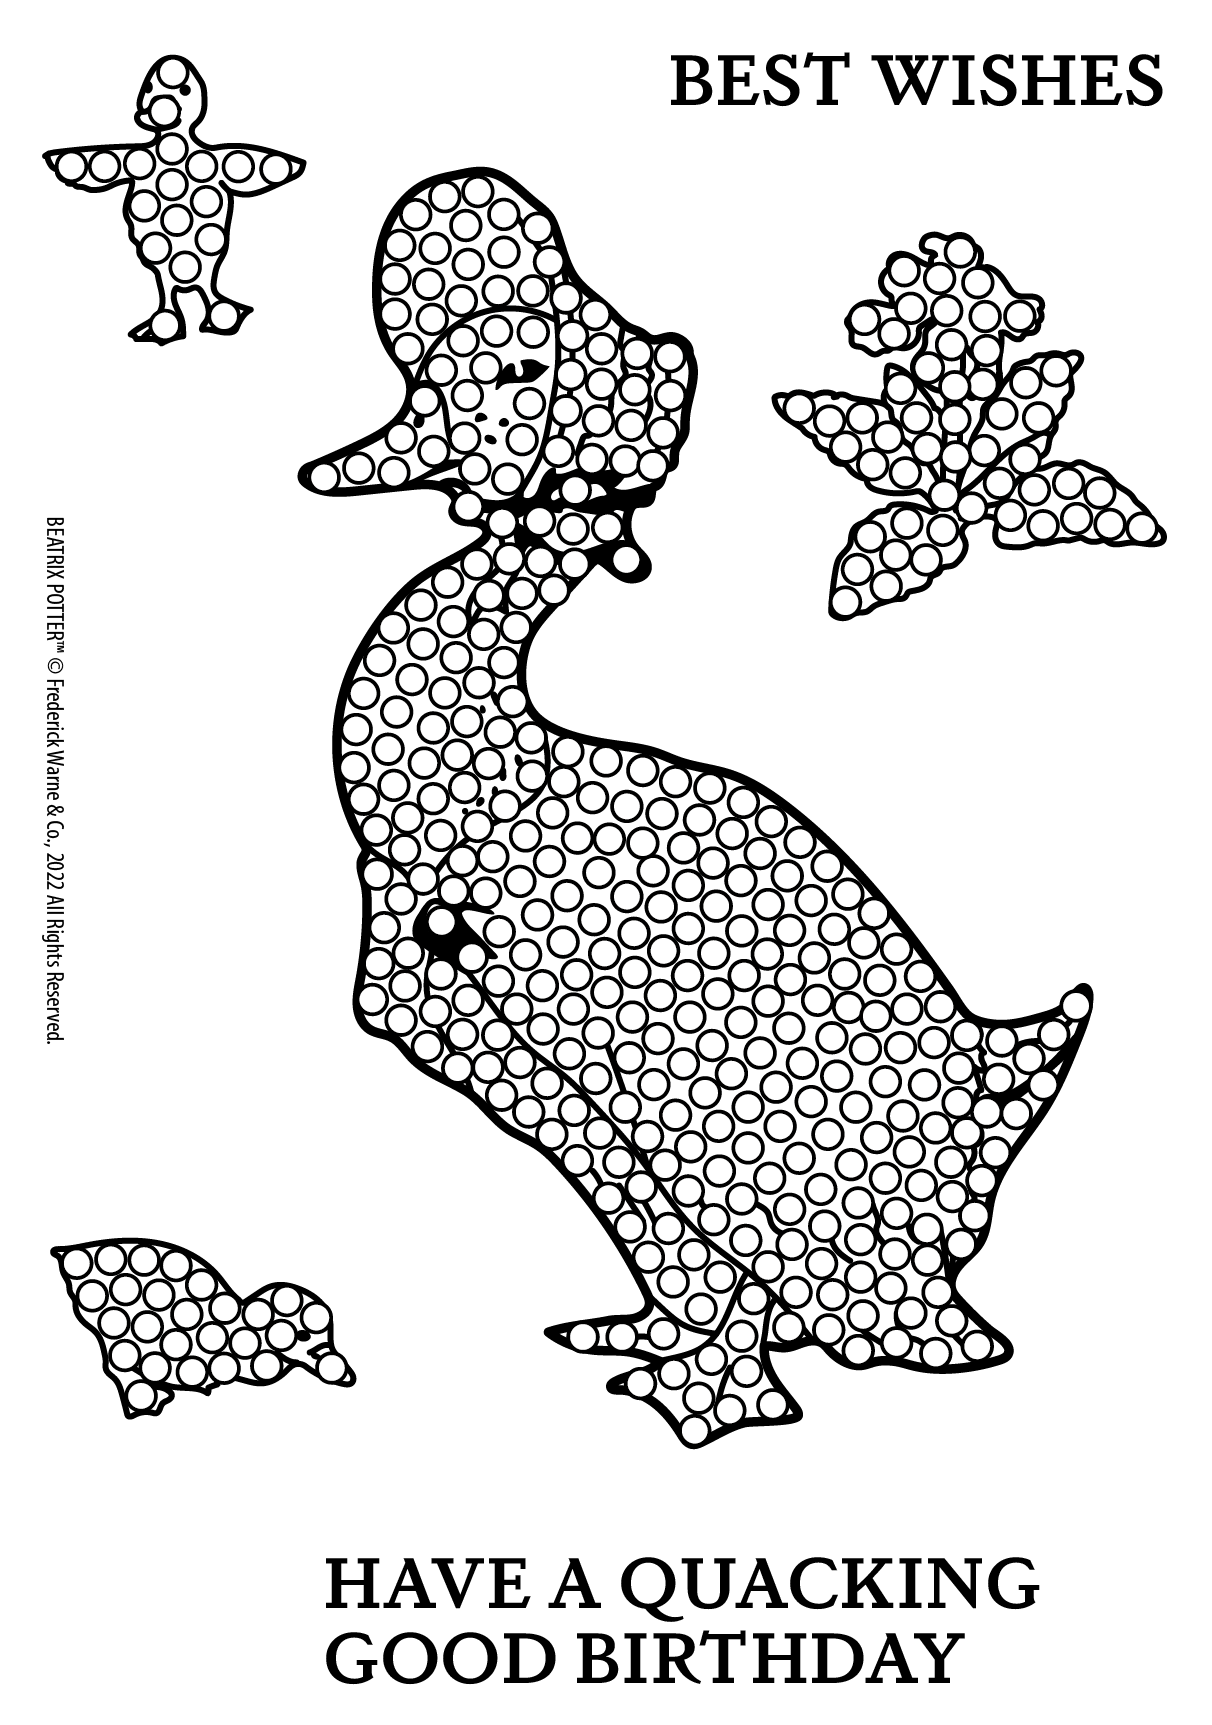 CCST-PR02: Peter Rabbit Crystal Art A6 Stamp Set - Jemima Puddle-Duck